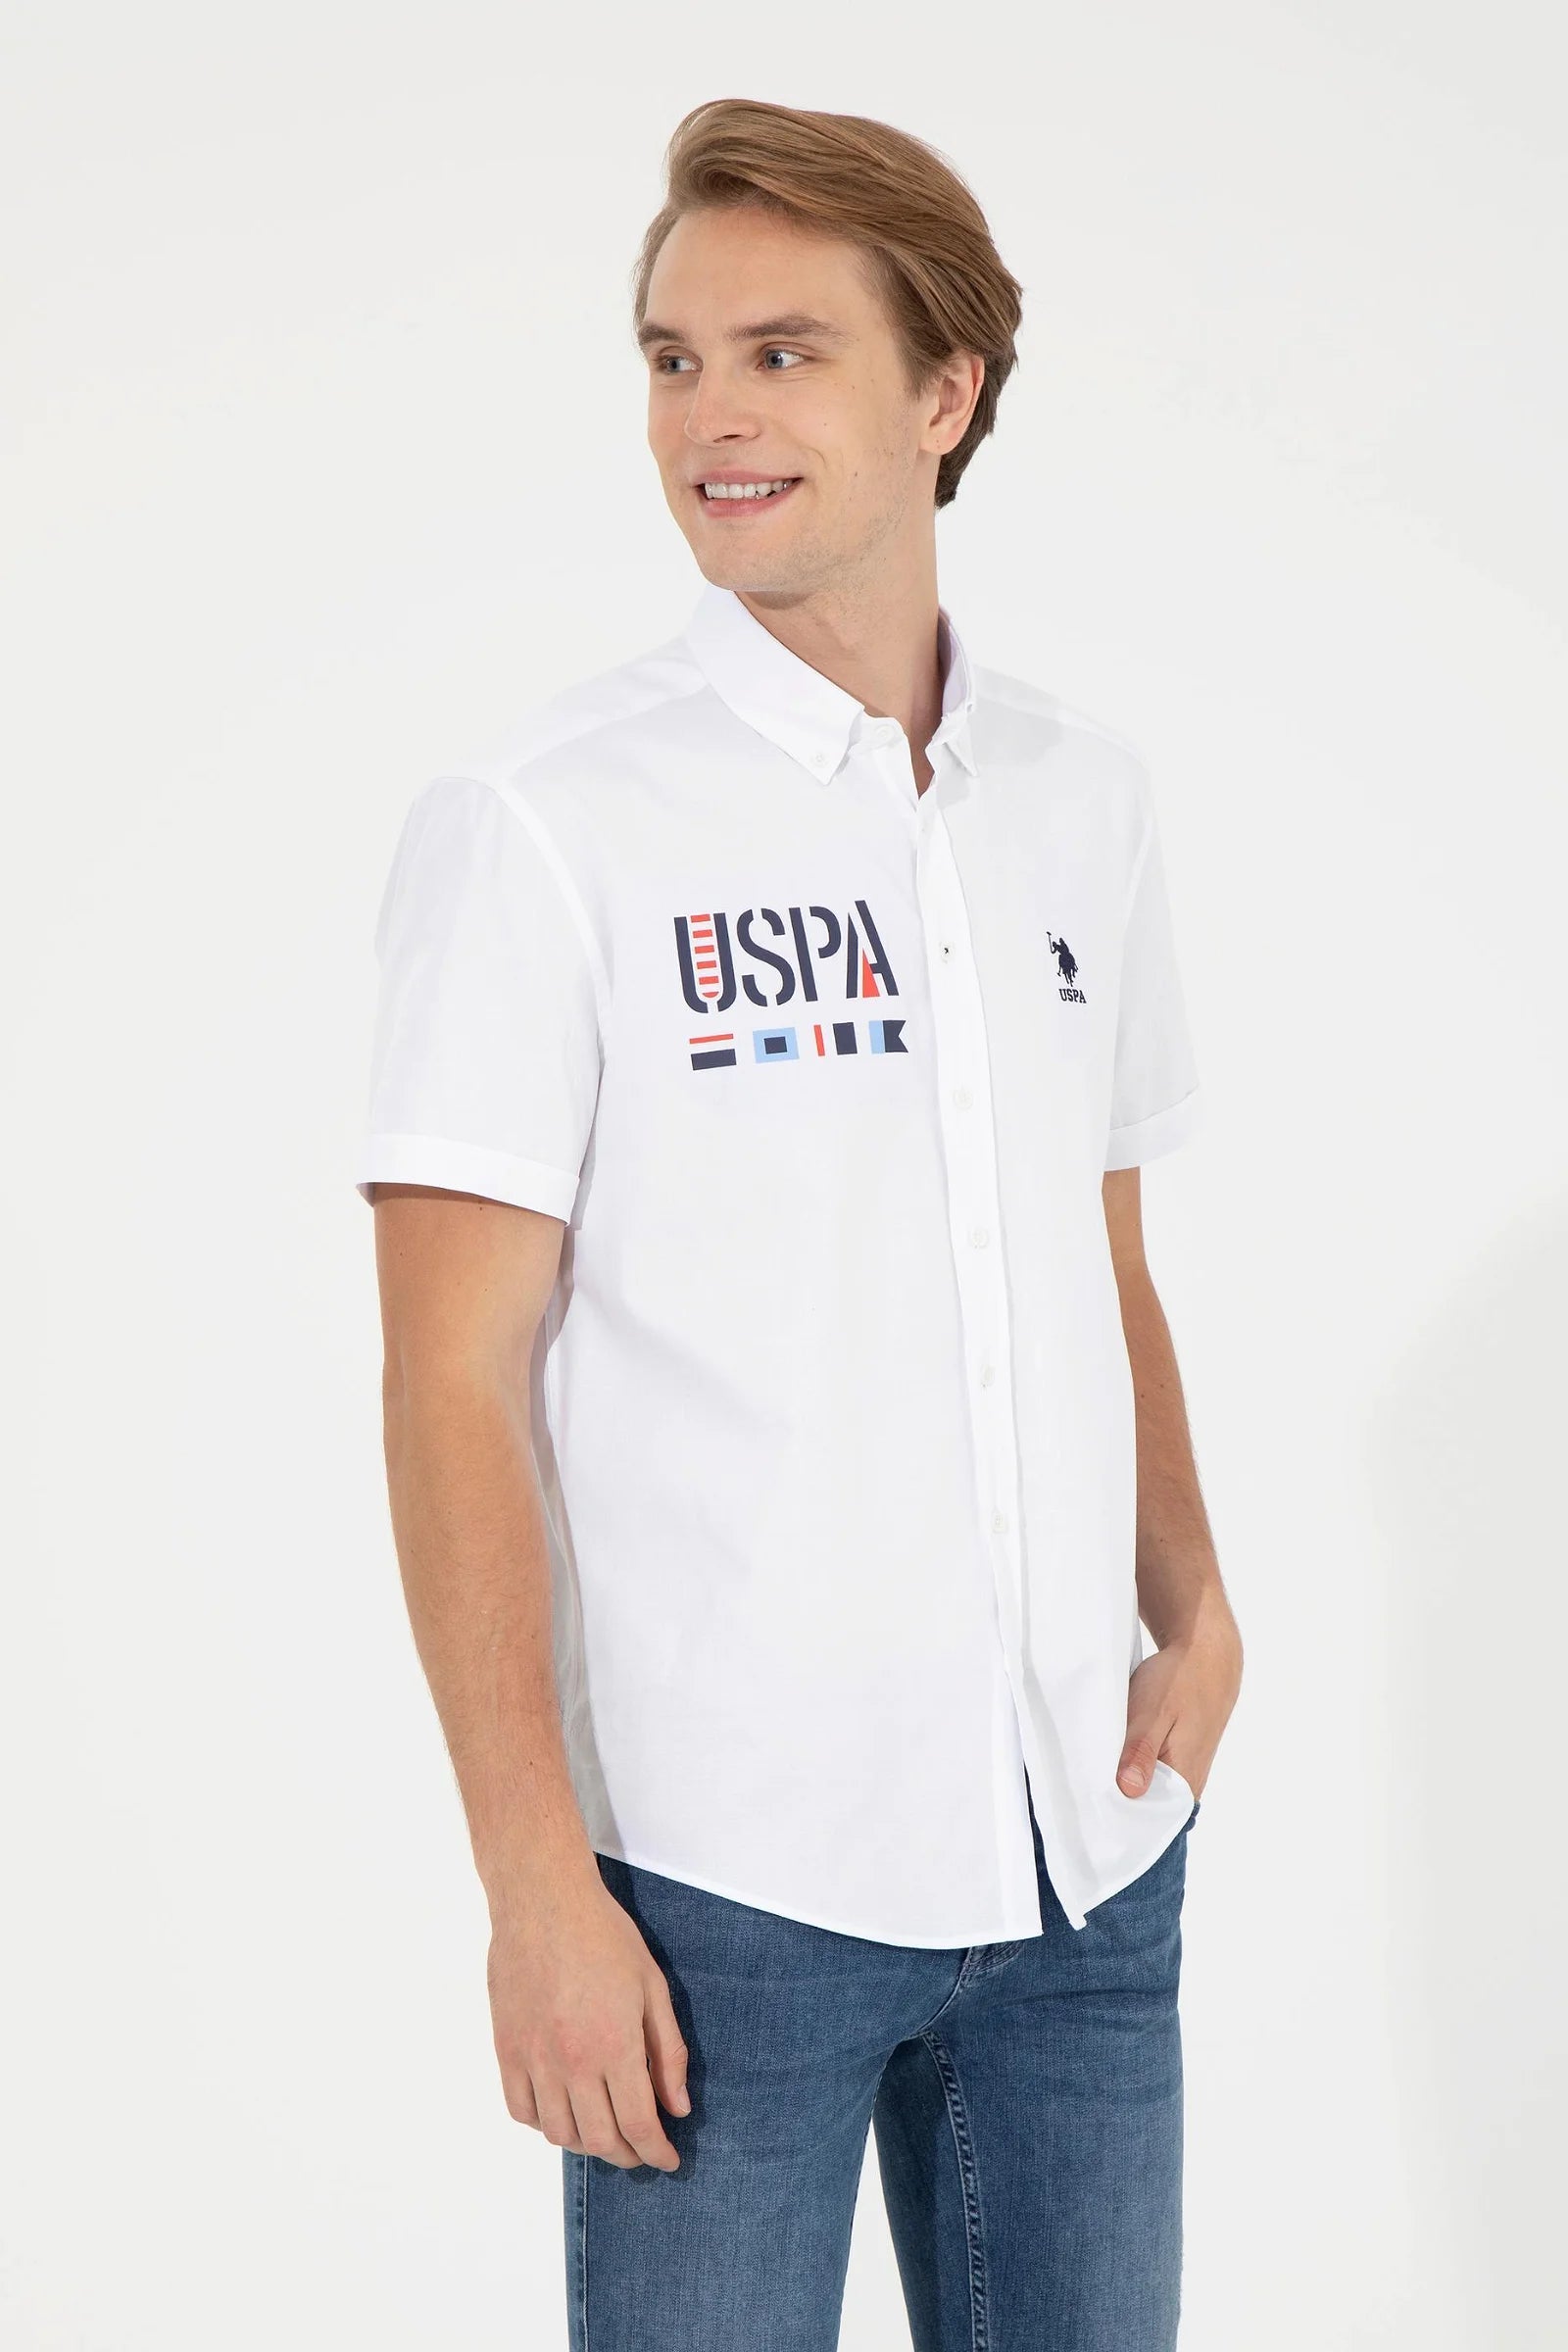 US Polo Assn. Men Shirts White- Oshoplin